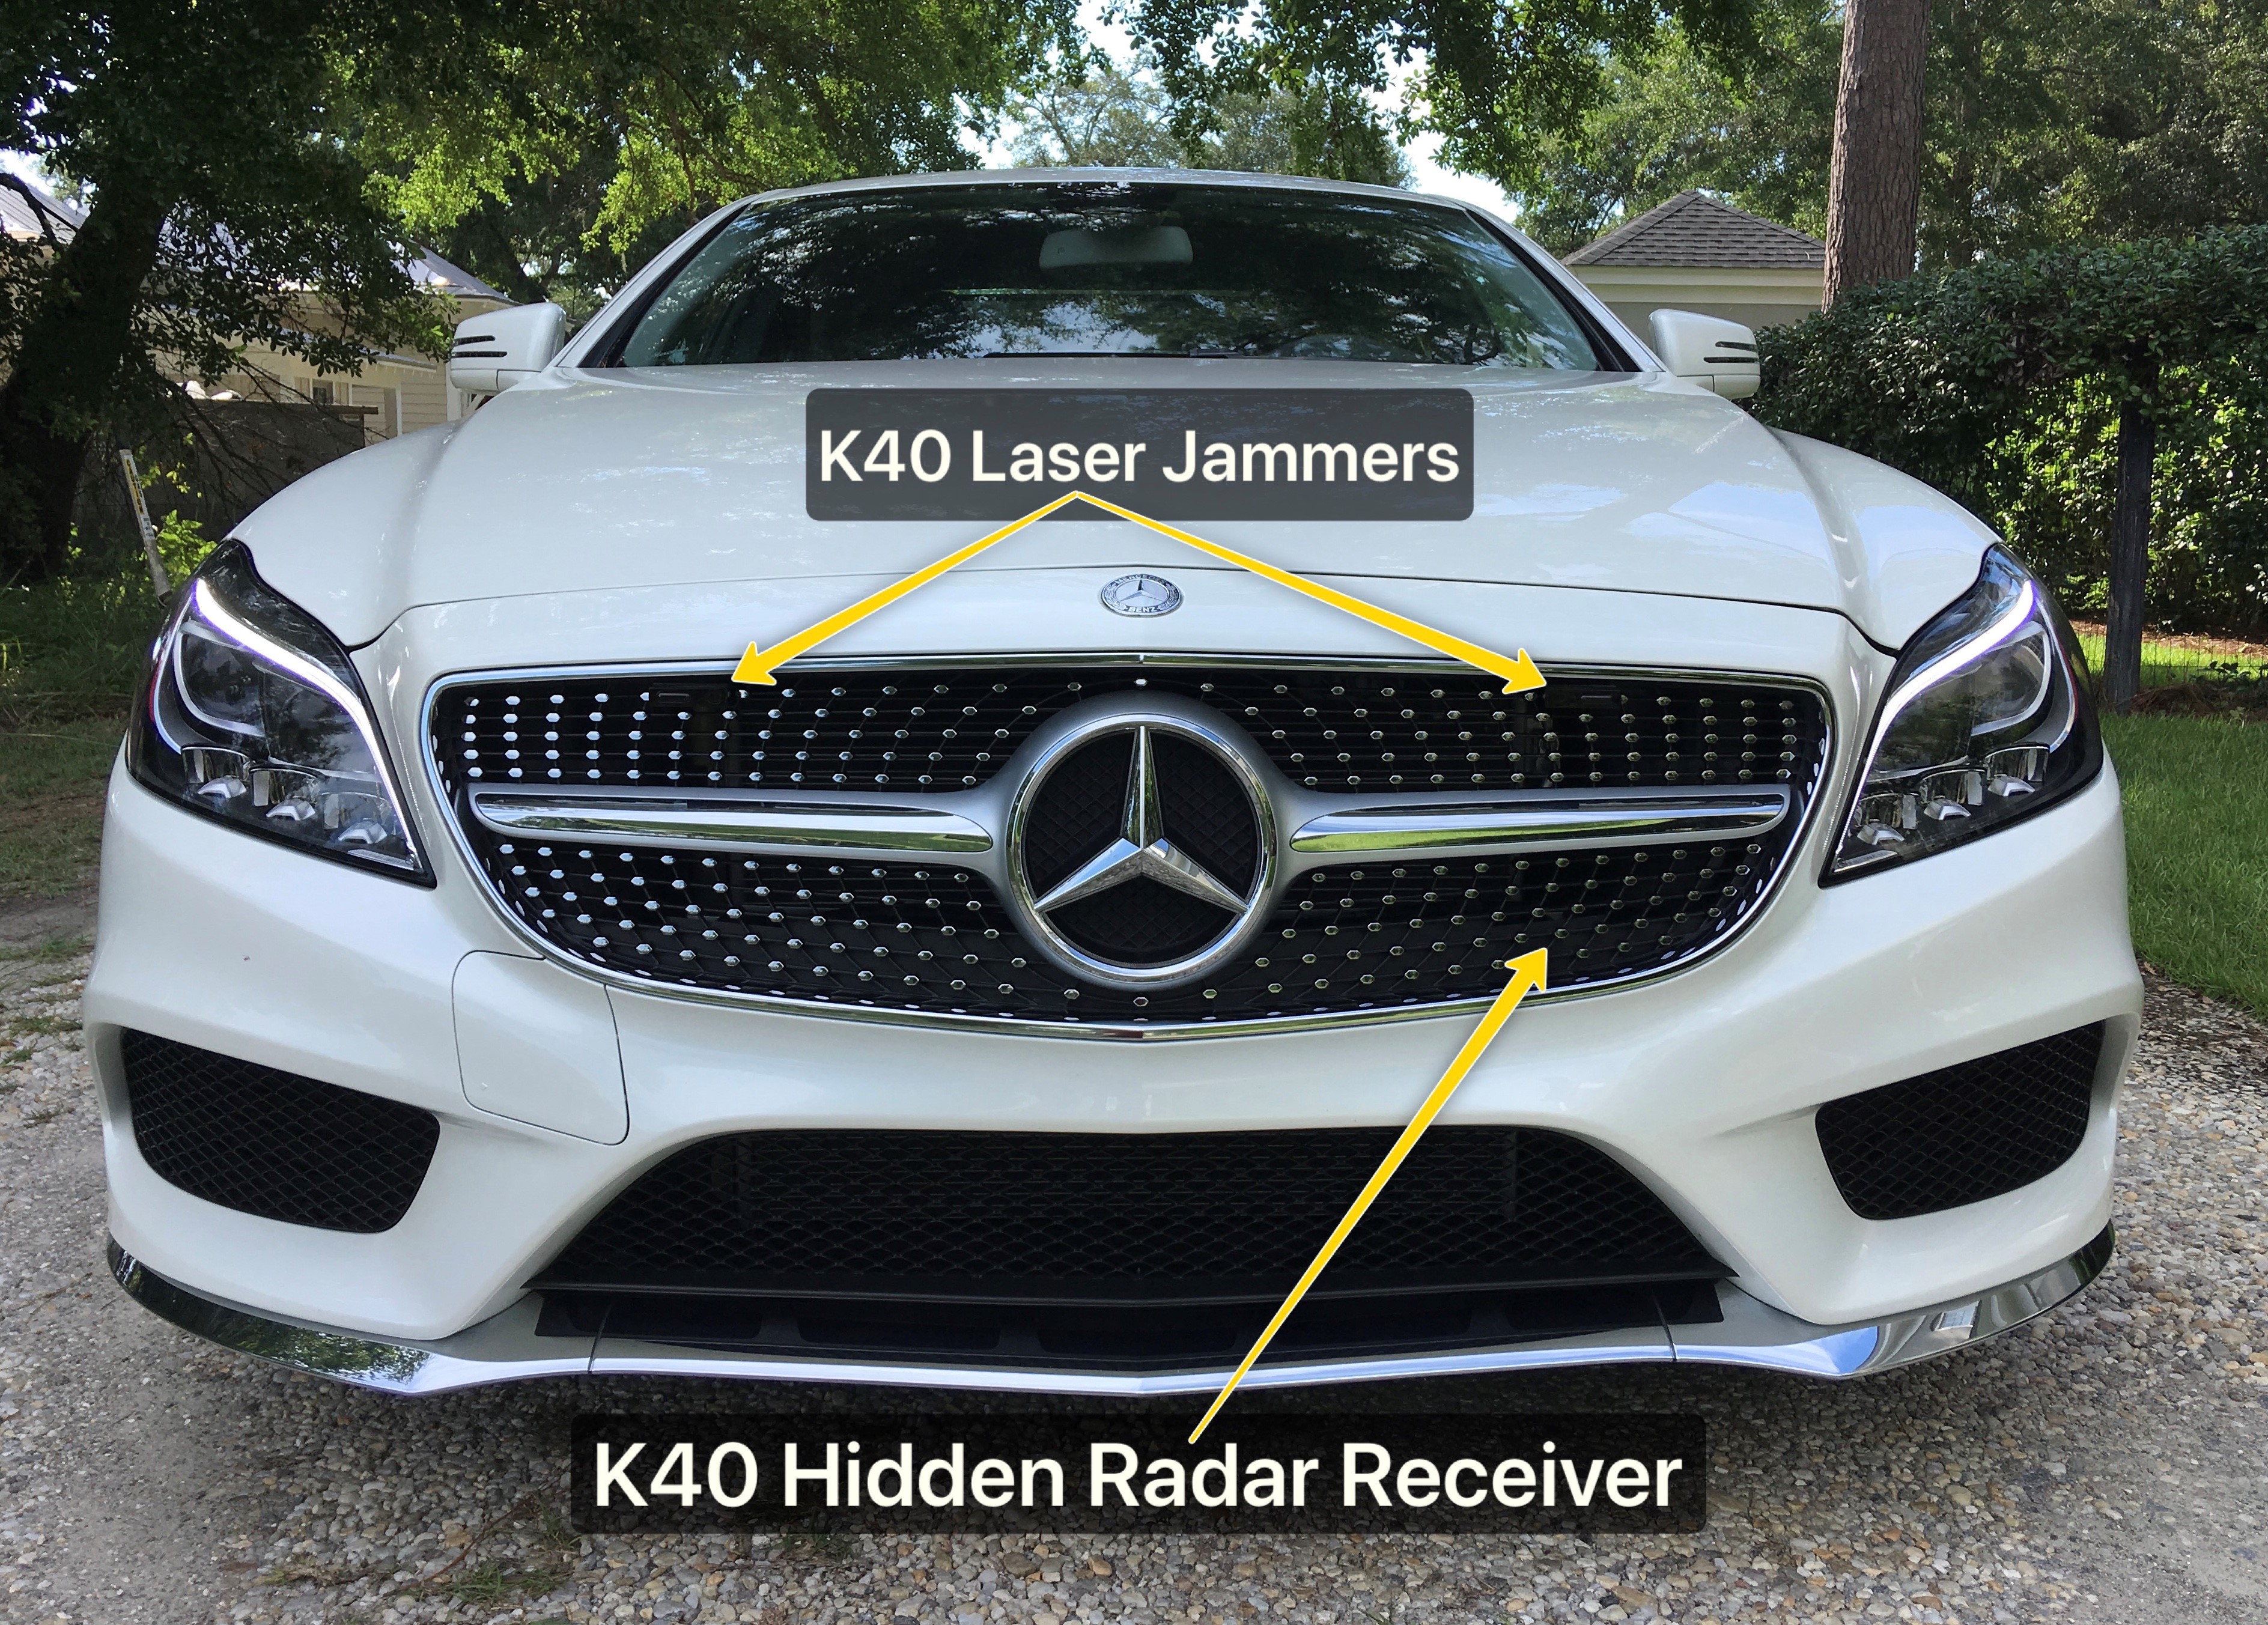 Custom K40 Police Laser Jammers and Hidden Radar Receiver Installed on 2017 Mercedes Benz CLS in Charlotte, NC